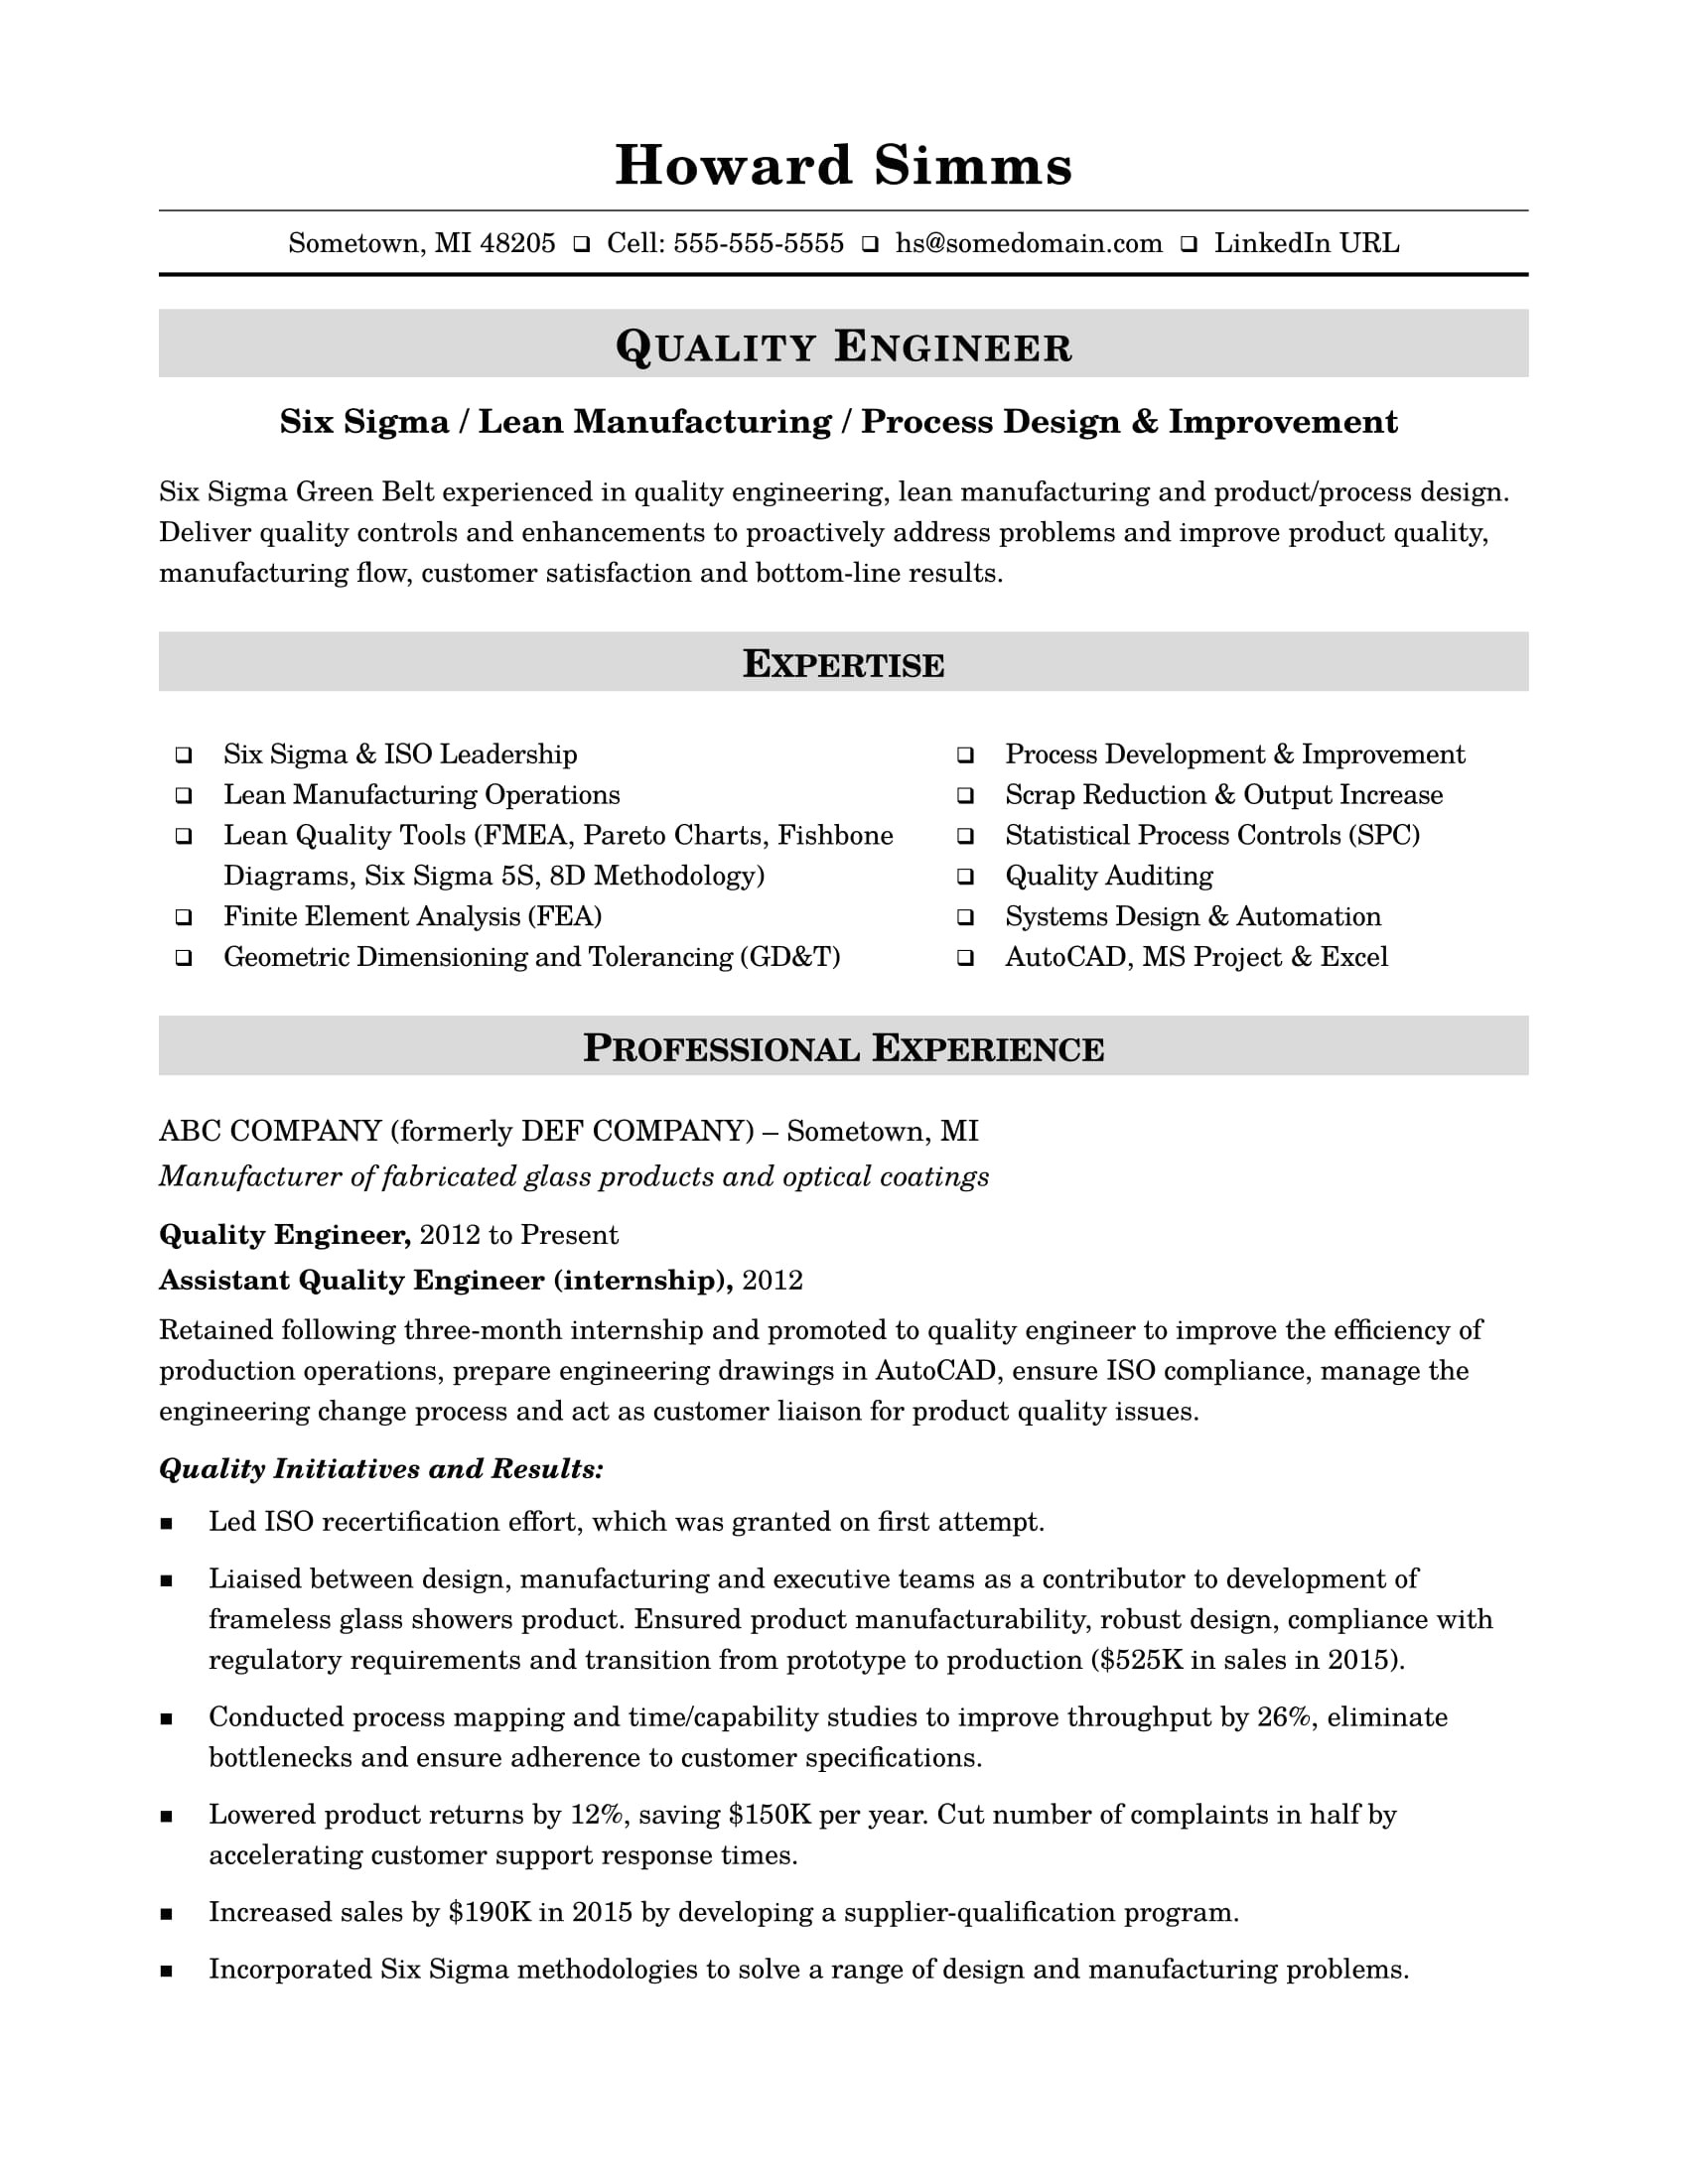 Quality Engineer Resume Sample Sample Resume for A Midlevel Quality Engineer Monster Com